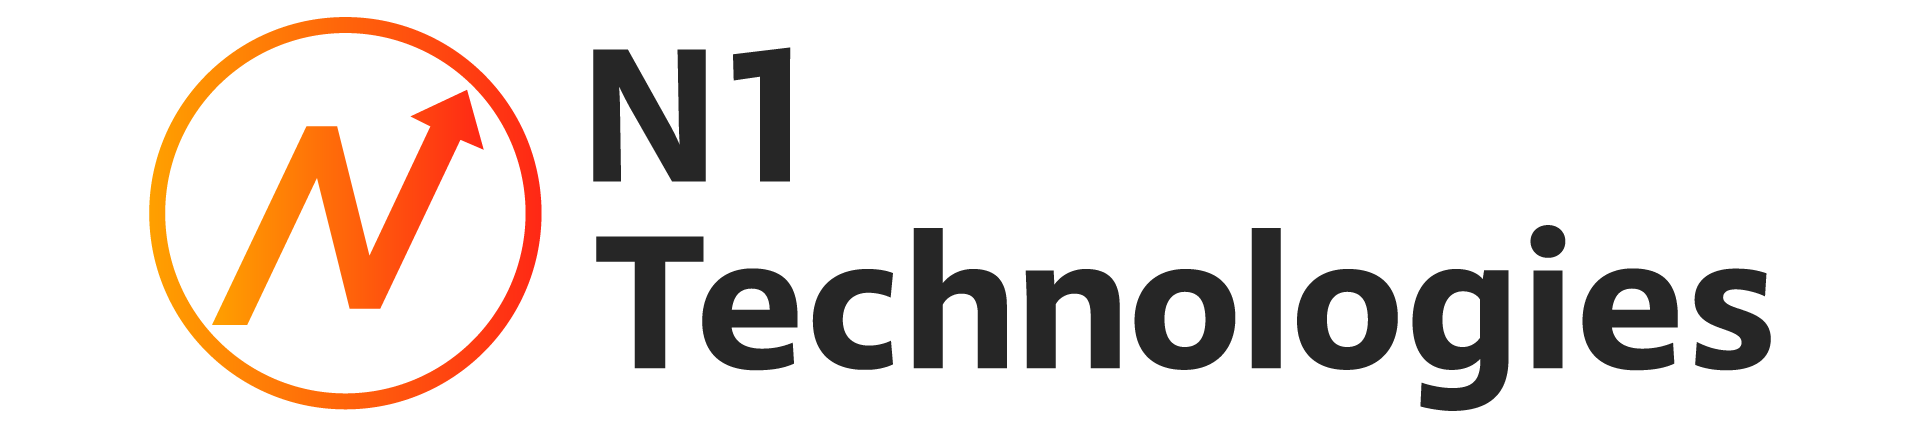 N1 Technologies